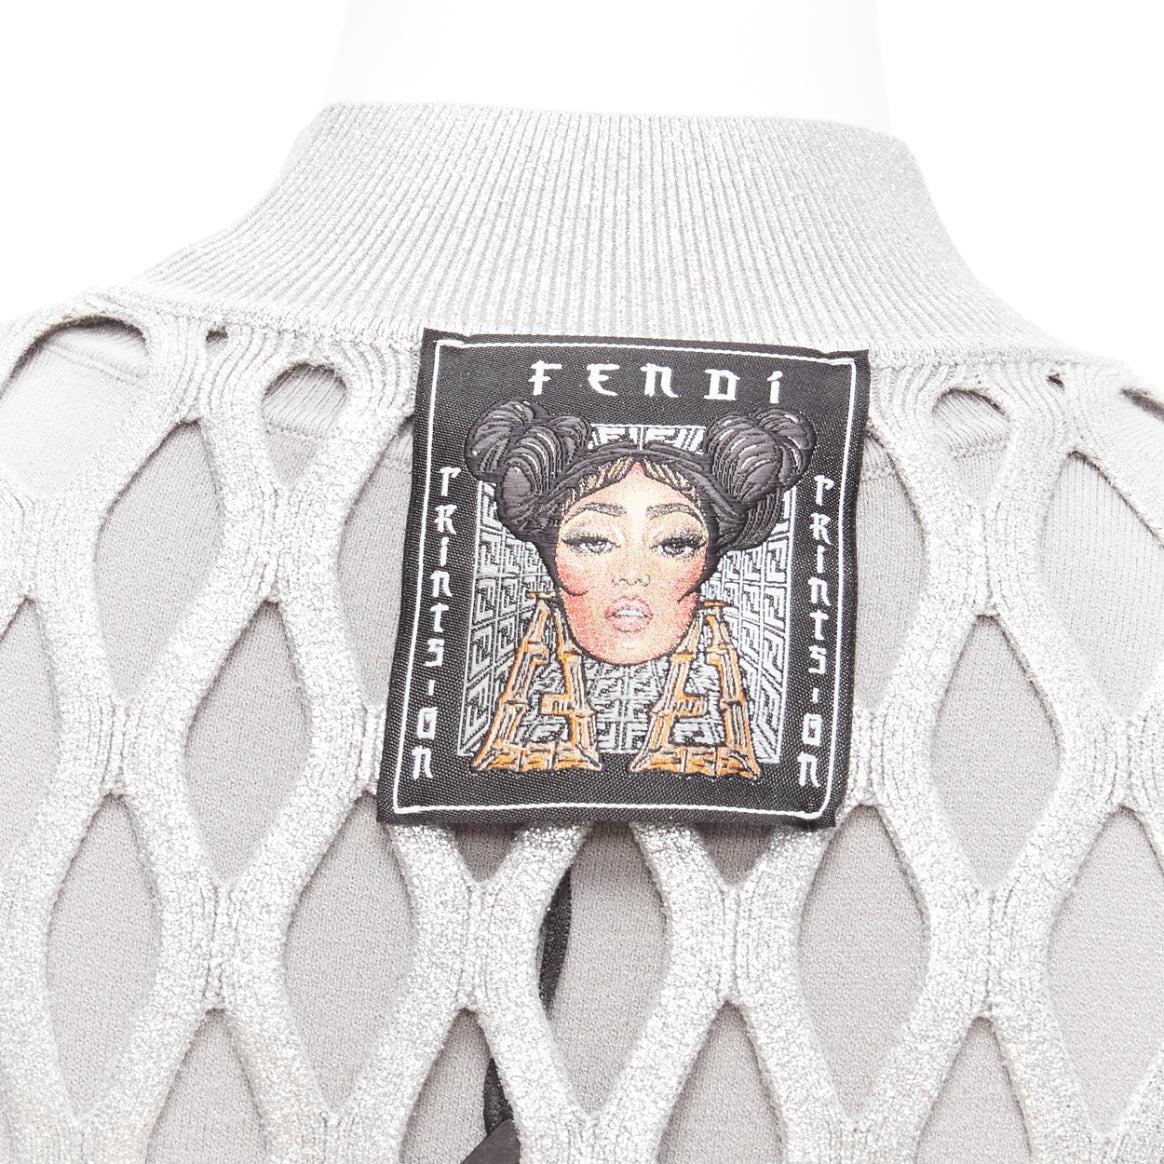 New FENDI Nicki Minaj 2019 Runway Abito silver net cut out lined dress IT42 M
Reference: TGAS/D00798
Brand: Fendi
Model: Abito
Collection: Nicki Minaj 2019
As seen on: Nicki Minaj
Material: Viscose, Blend
Color: Silver, Grey
Pattern: Solid
Closure: